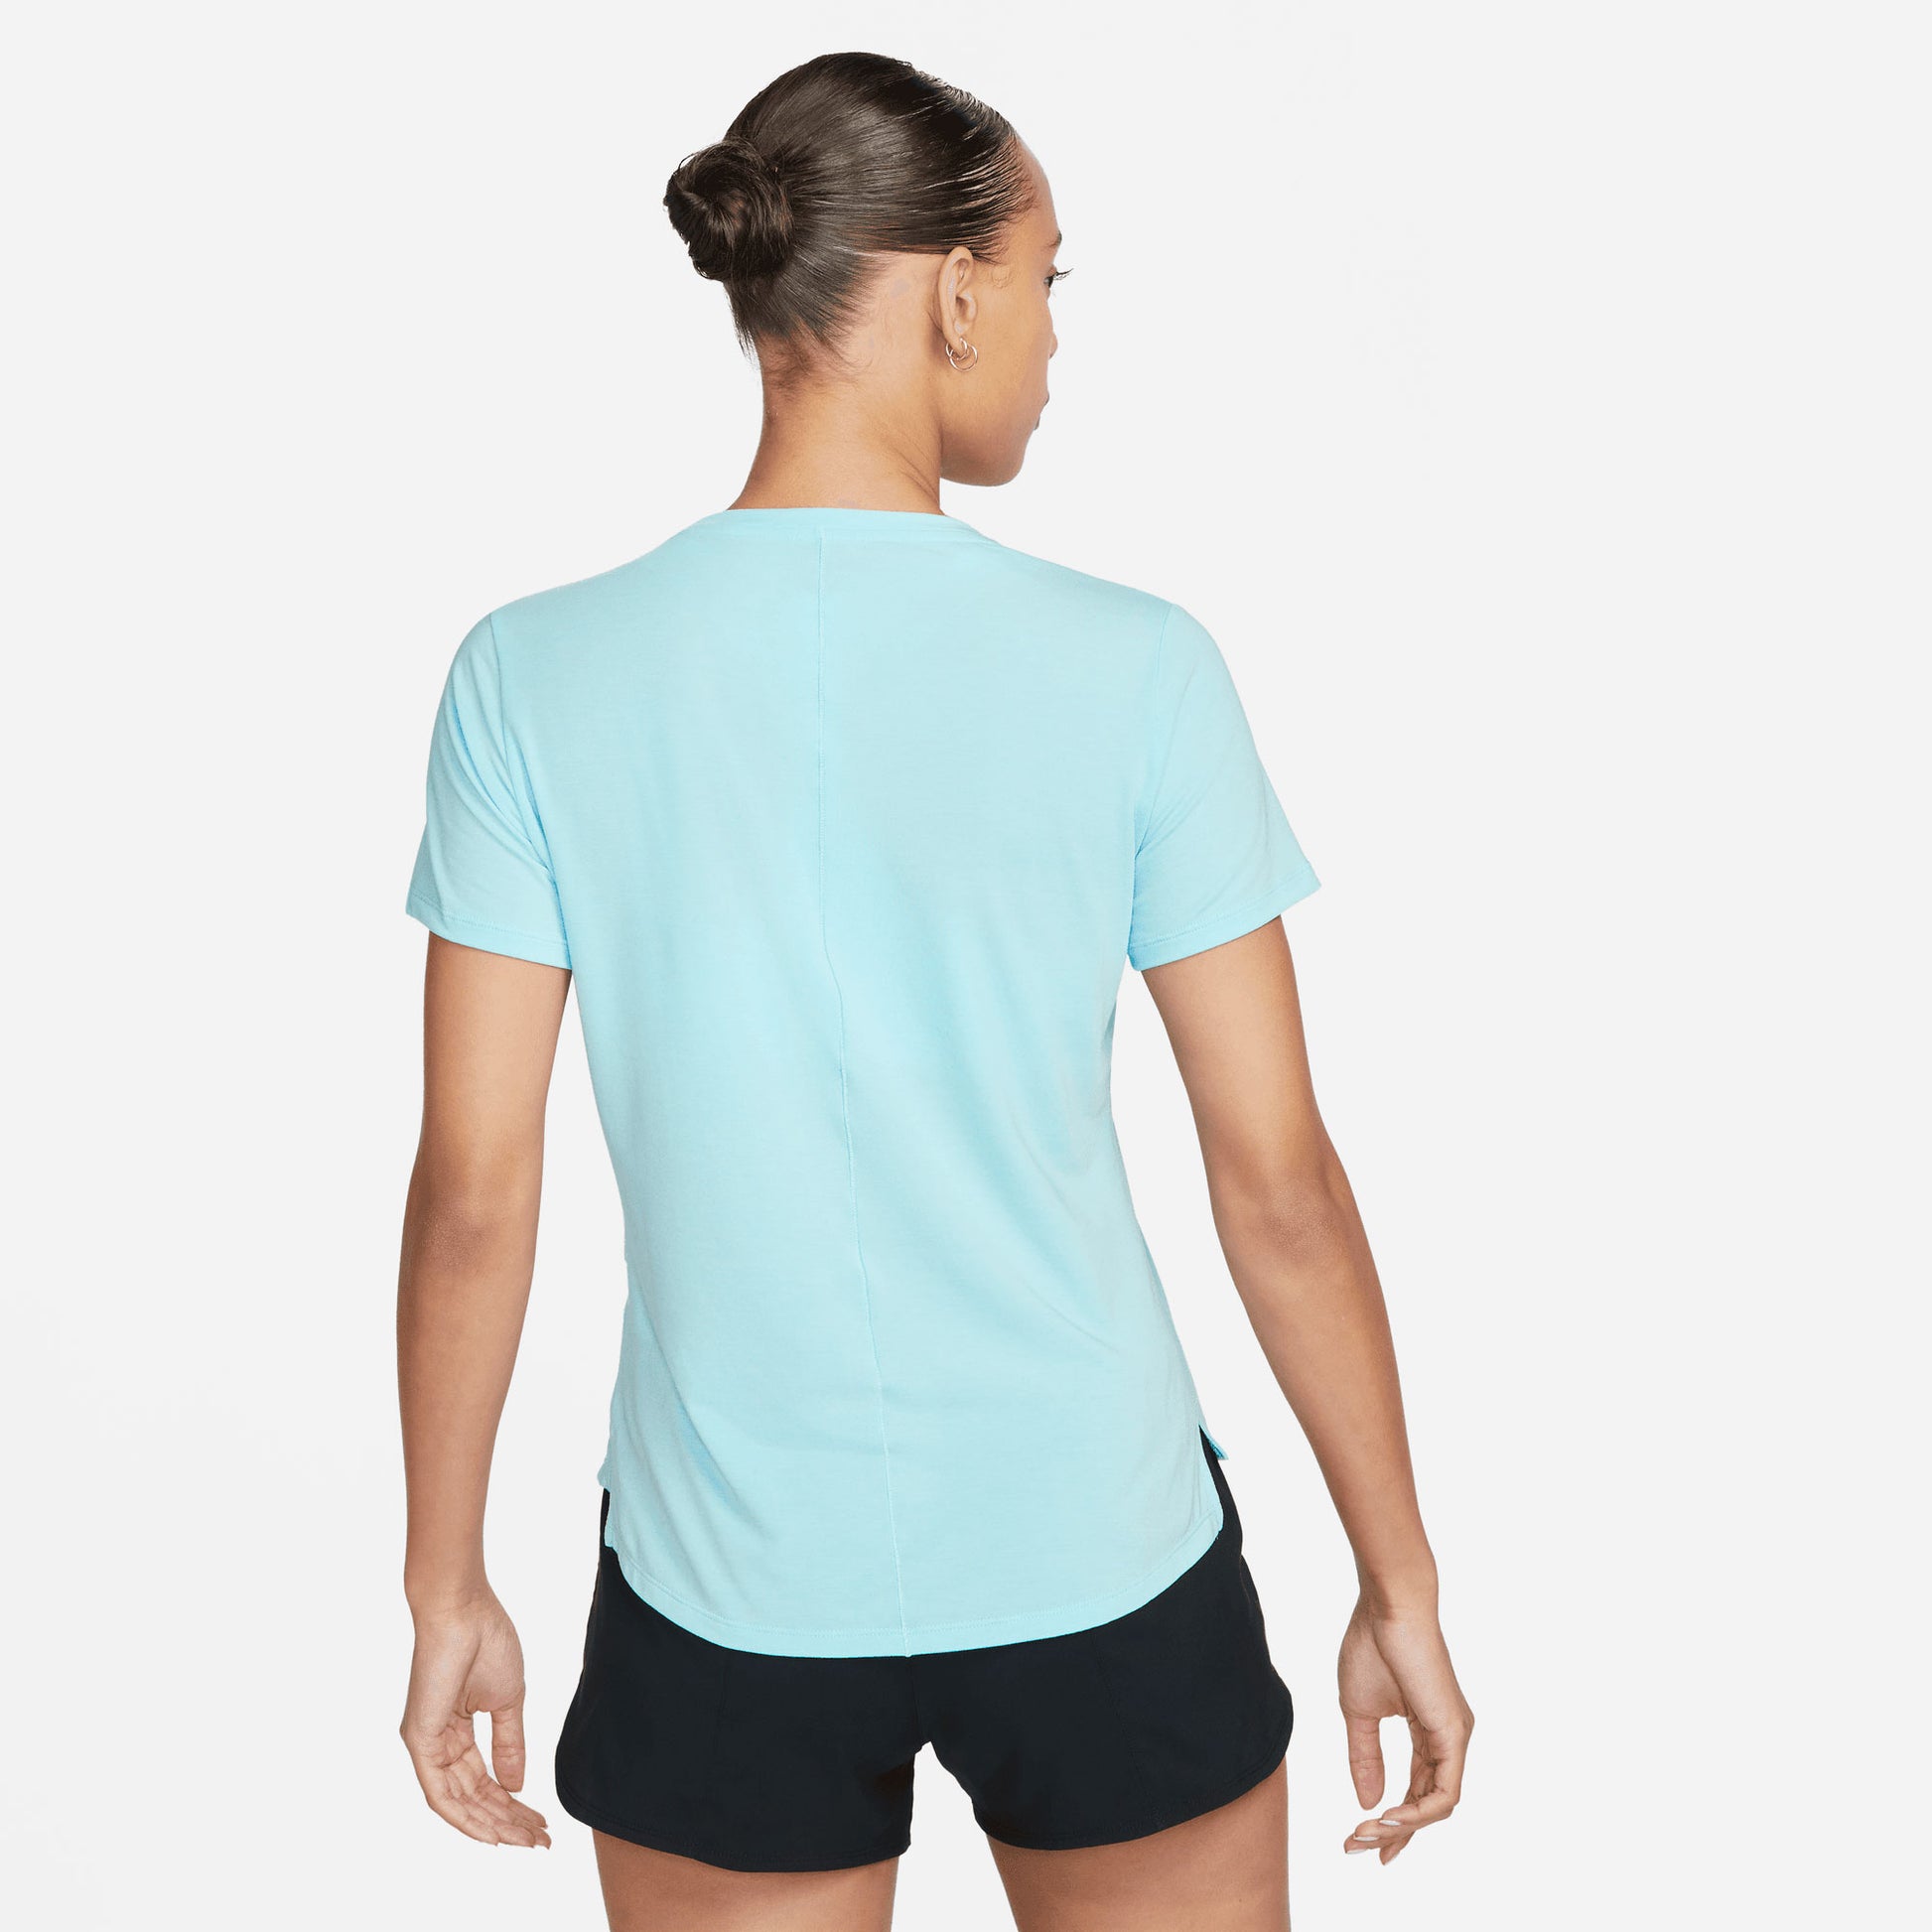 Verplaatsing Republikeinse partij tekort Nike One Luxe Dri-FIT Dames Standaard Fit Shirt Blauw - Tennis Only